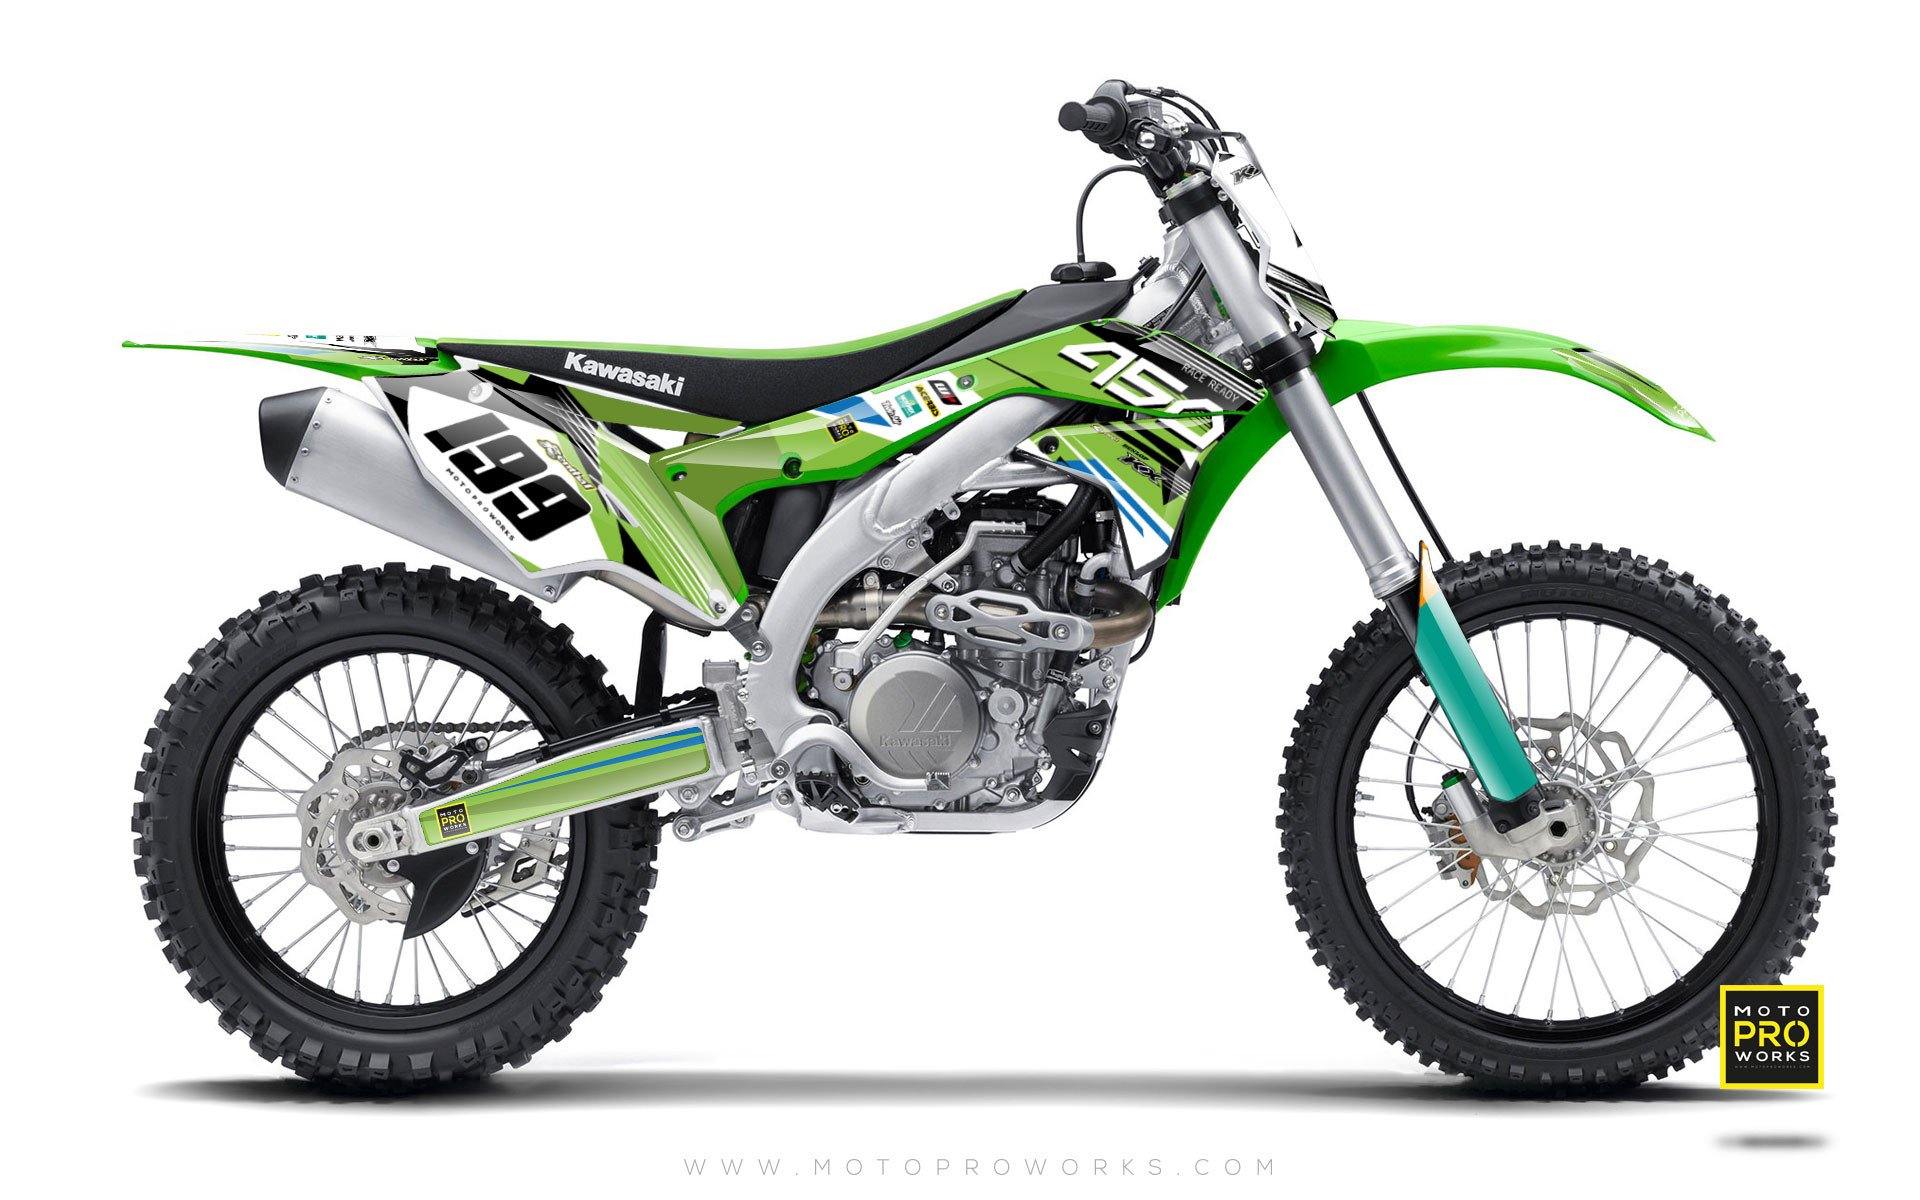 Kawasaki GRAPHIC KIT - "GOFAST" (green) - MotoProWorks | Decals and Bike Graphic kit